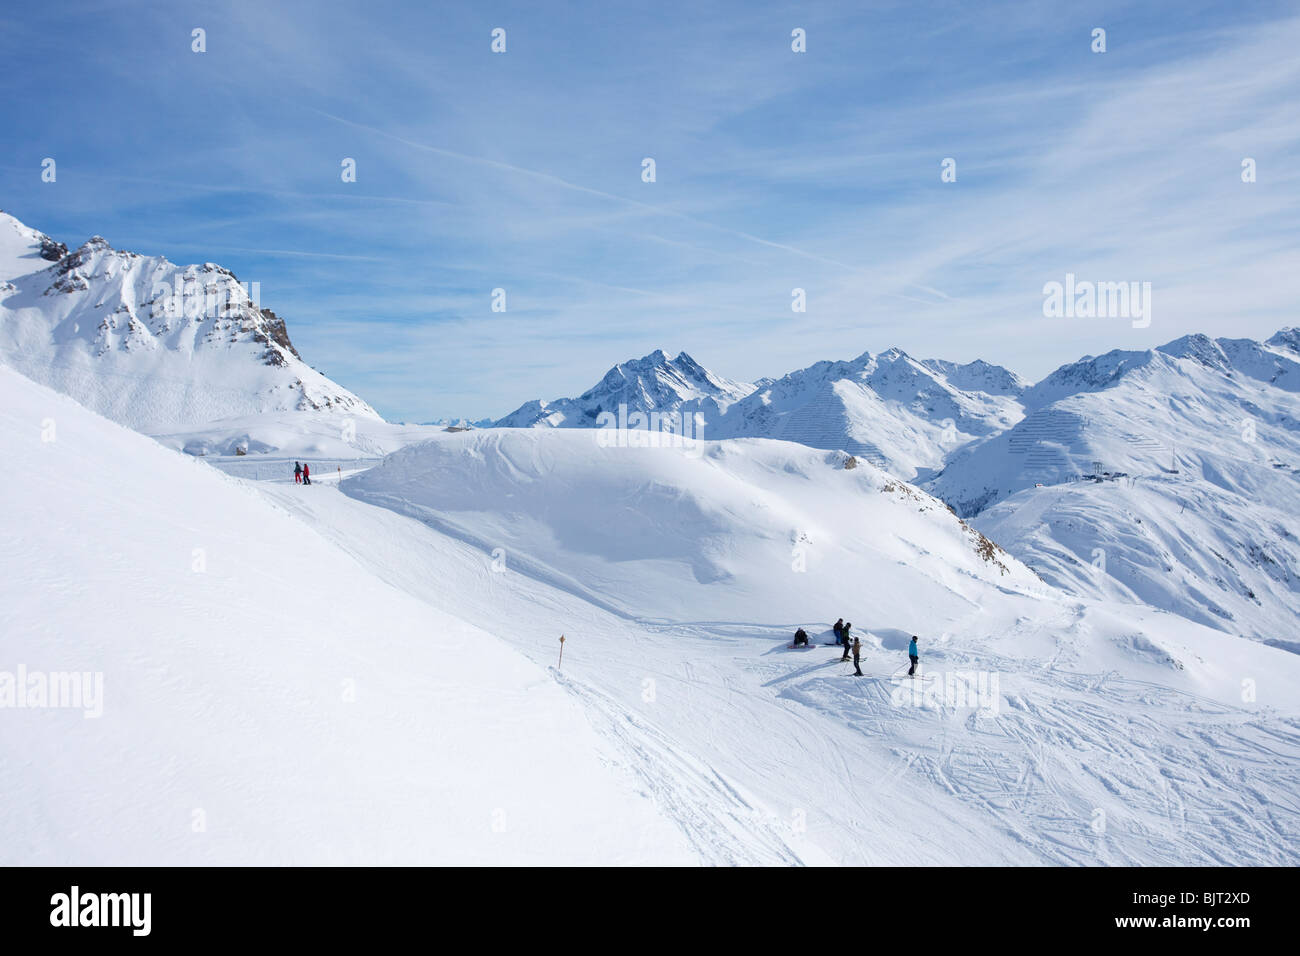 Skiers skiing in winter snow St Saint Anton am Arlberg Austrian Alps Austria Europe Stock Photo